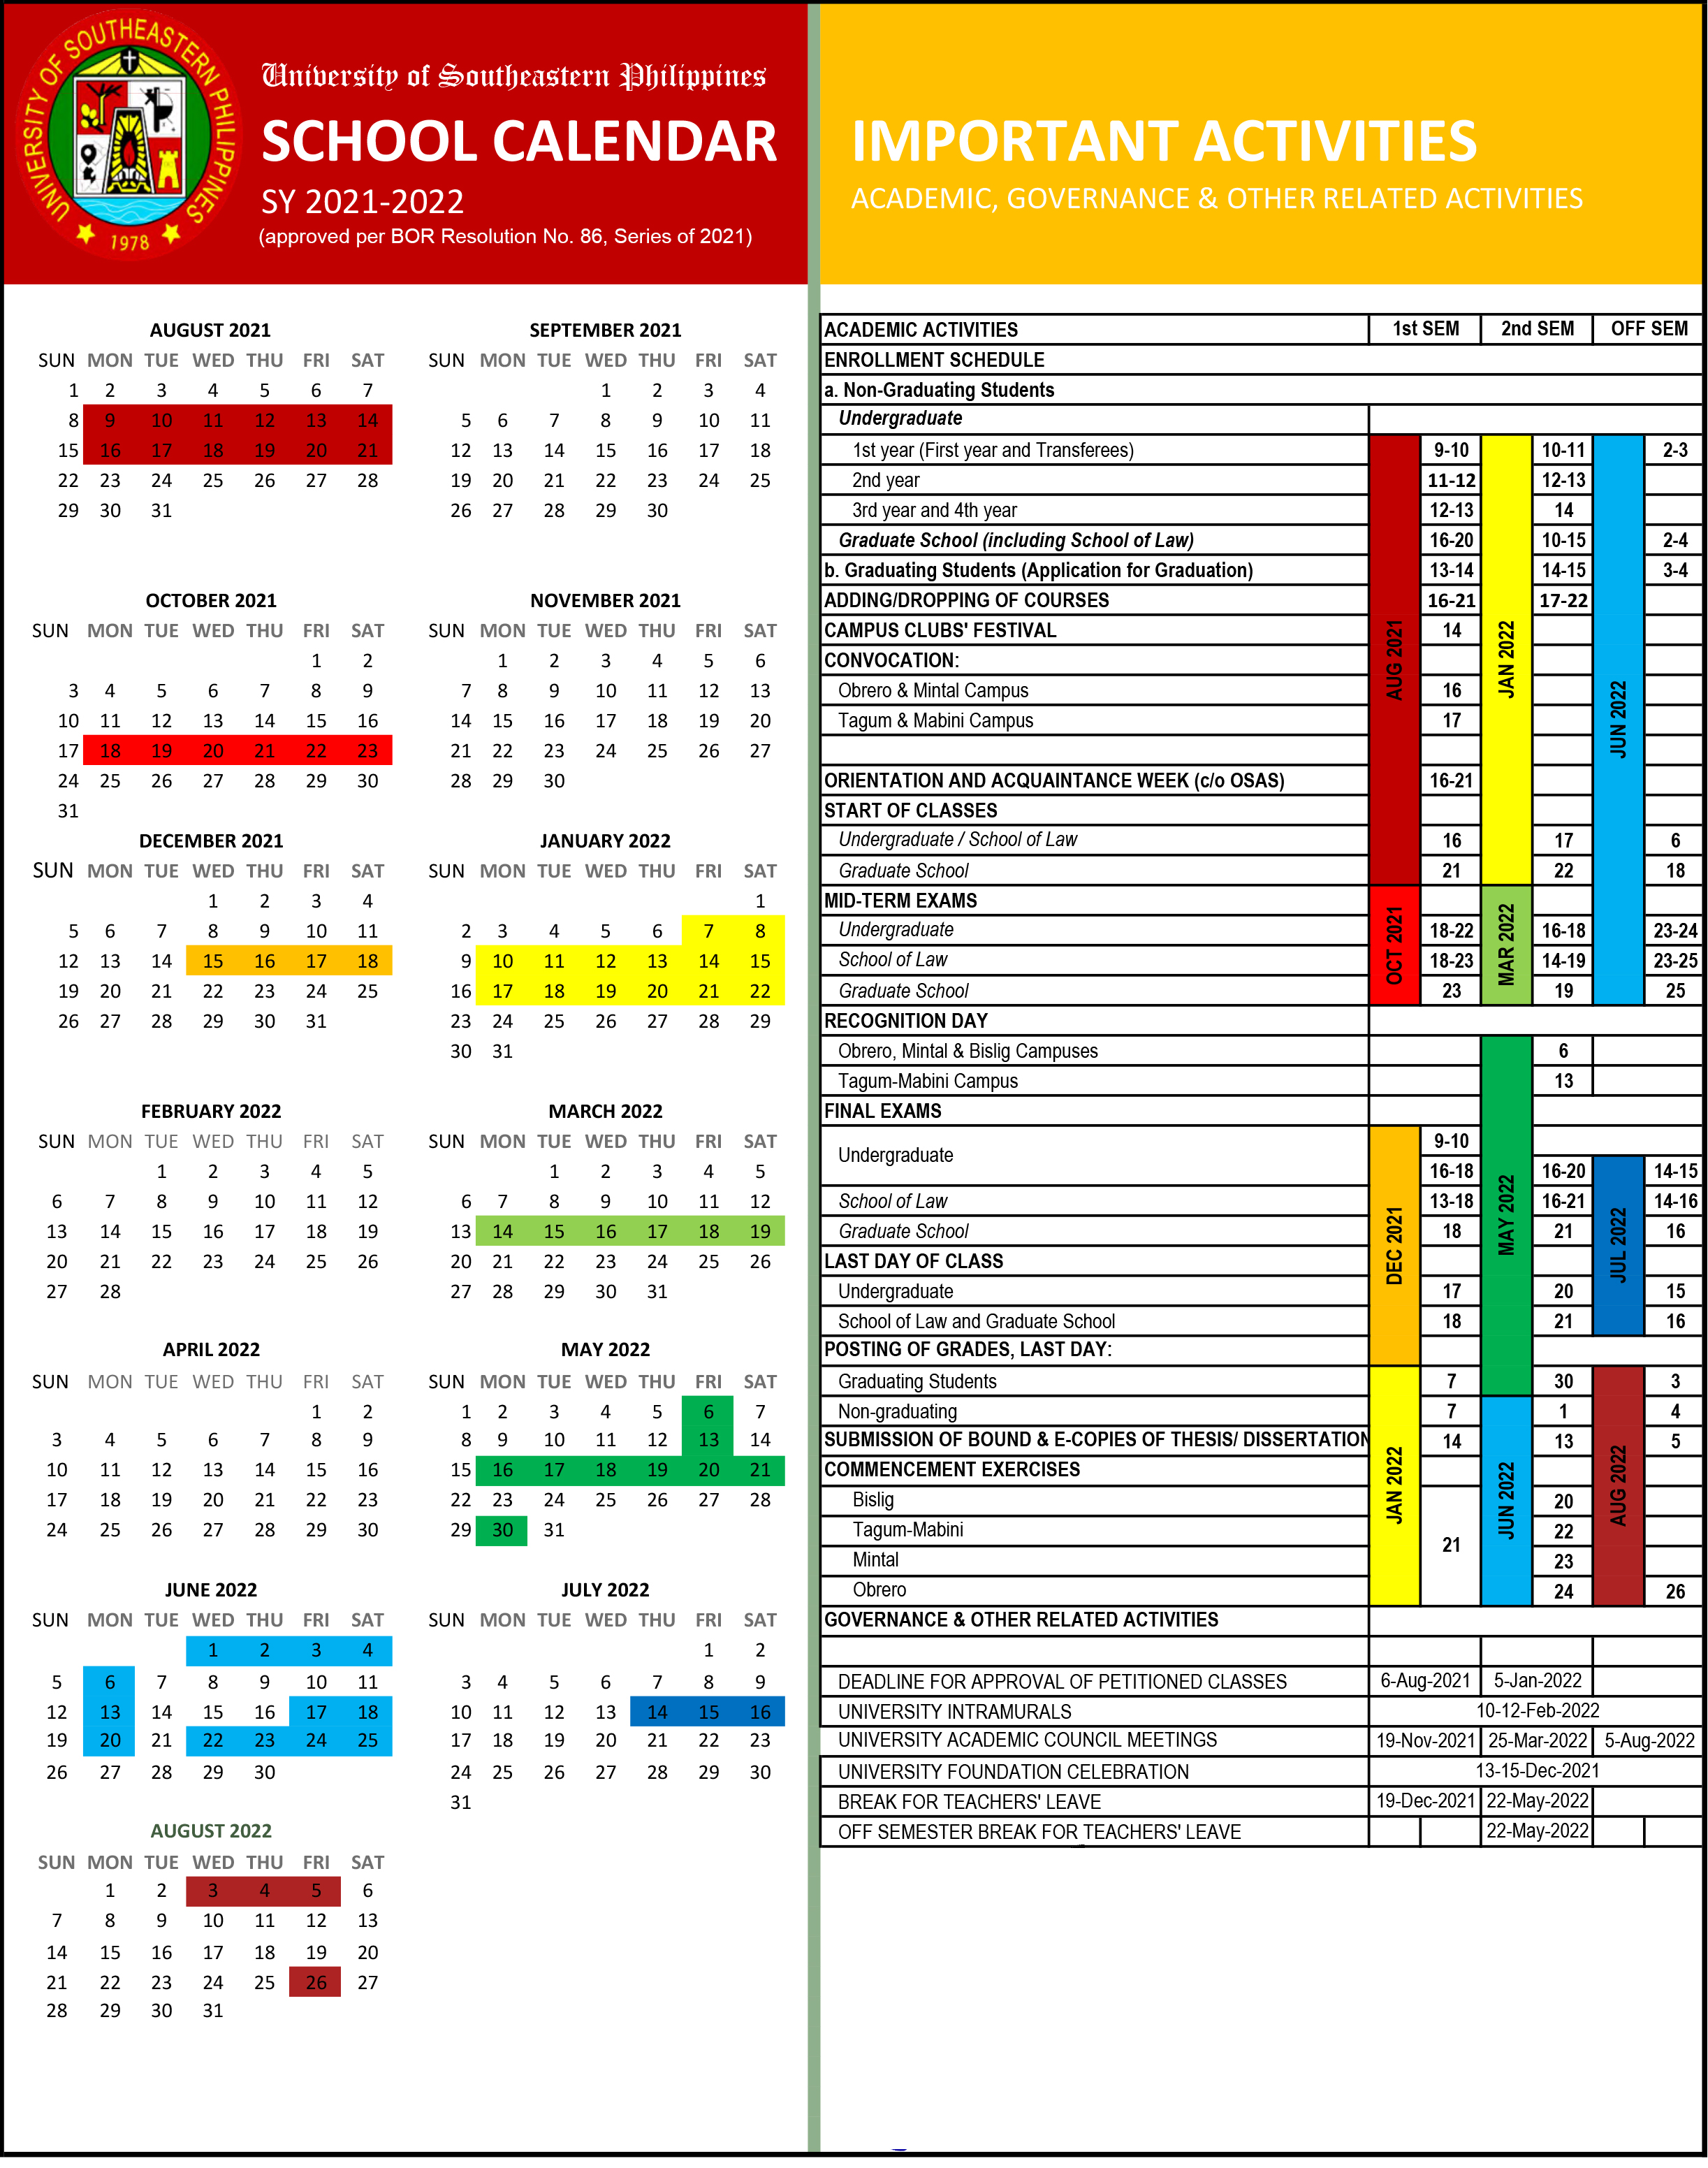 USeP School Calendar SY 2021 2022 University of Southeastern